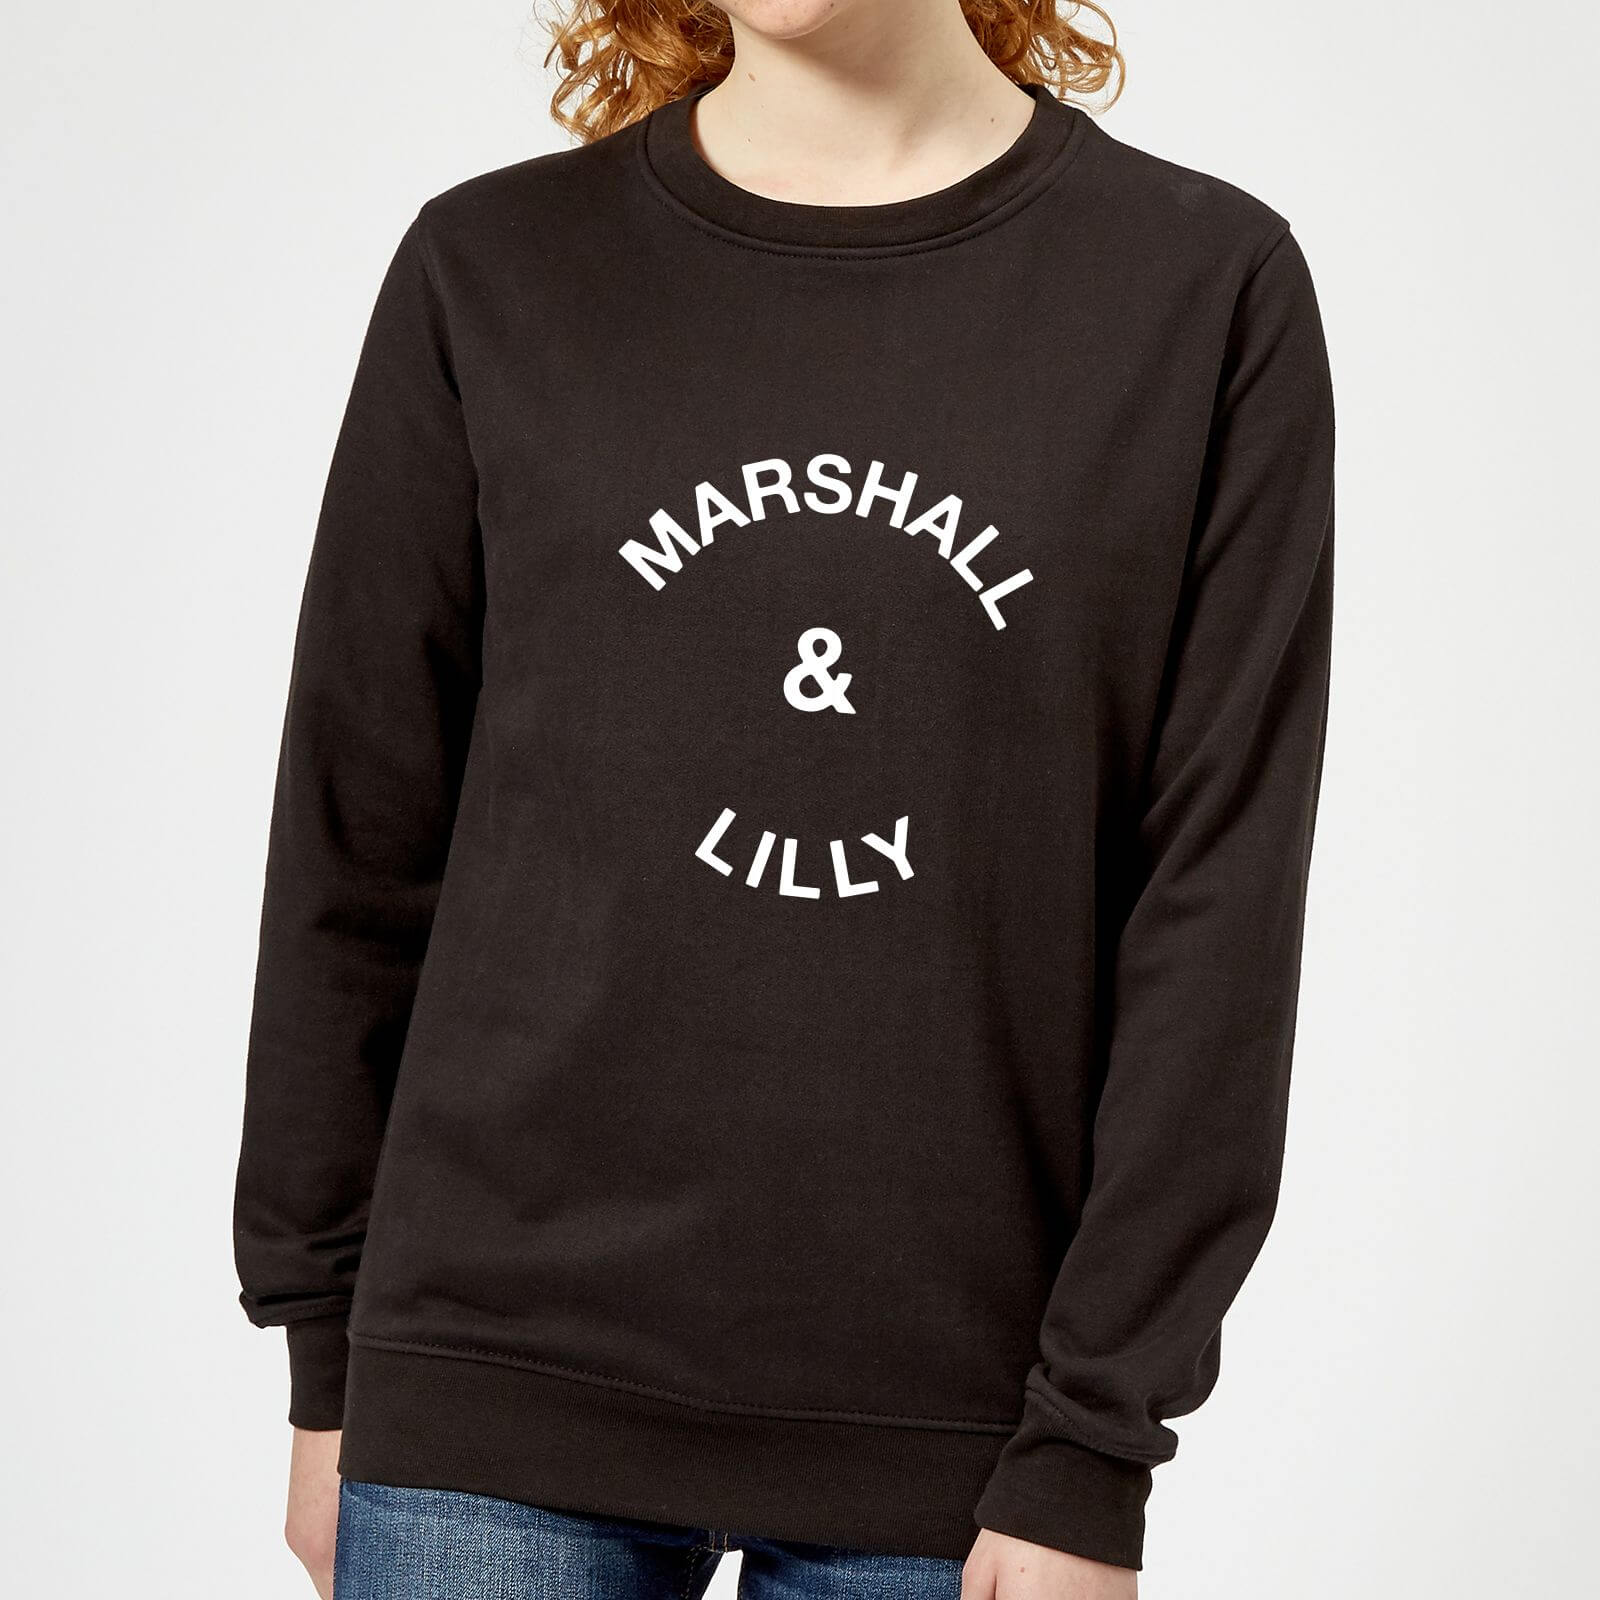 Marshall & Lilly Women's Sweatshirt - Black - 5XL - Black